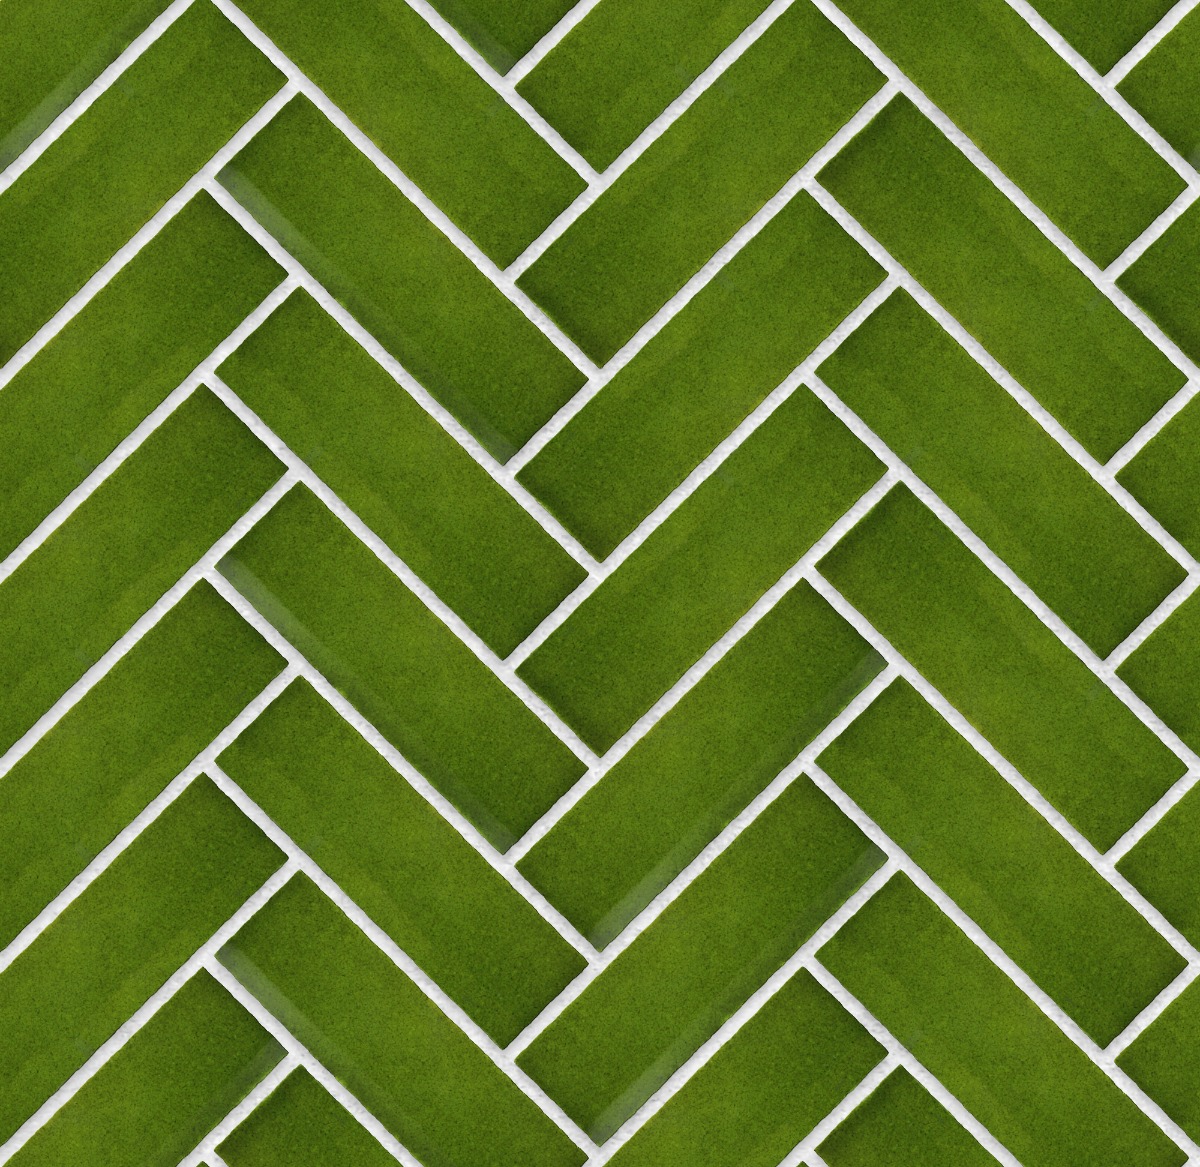 A seamless brick texture with eco-glazed brick slip jade green units arranged in a Herringbone pattern